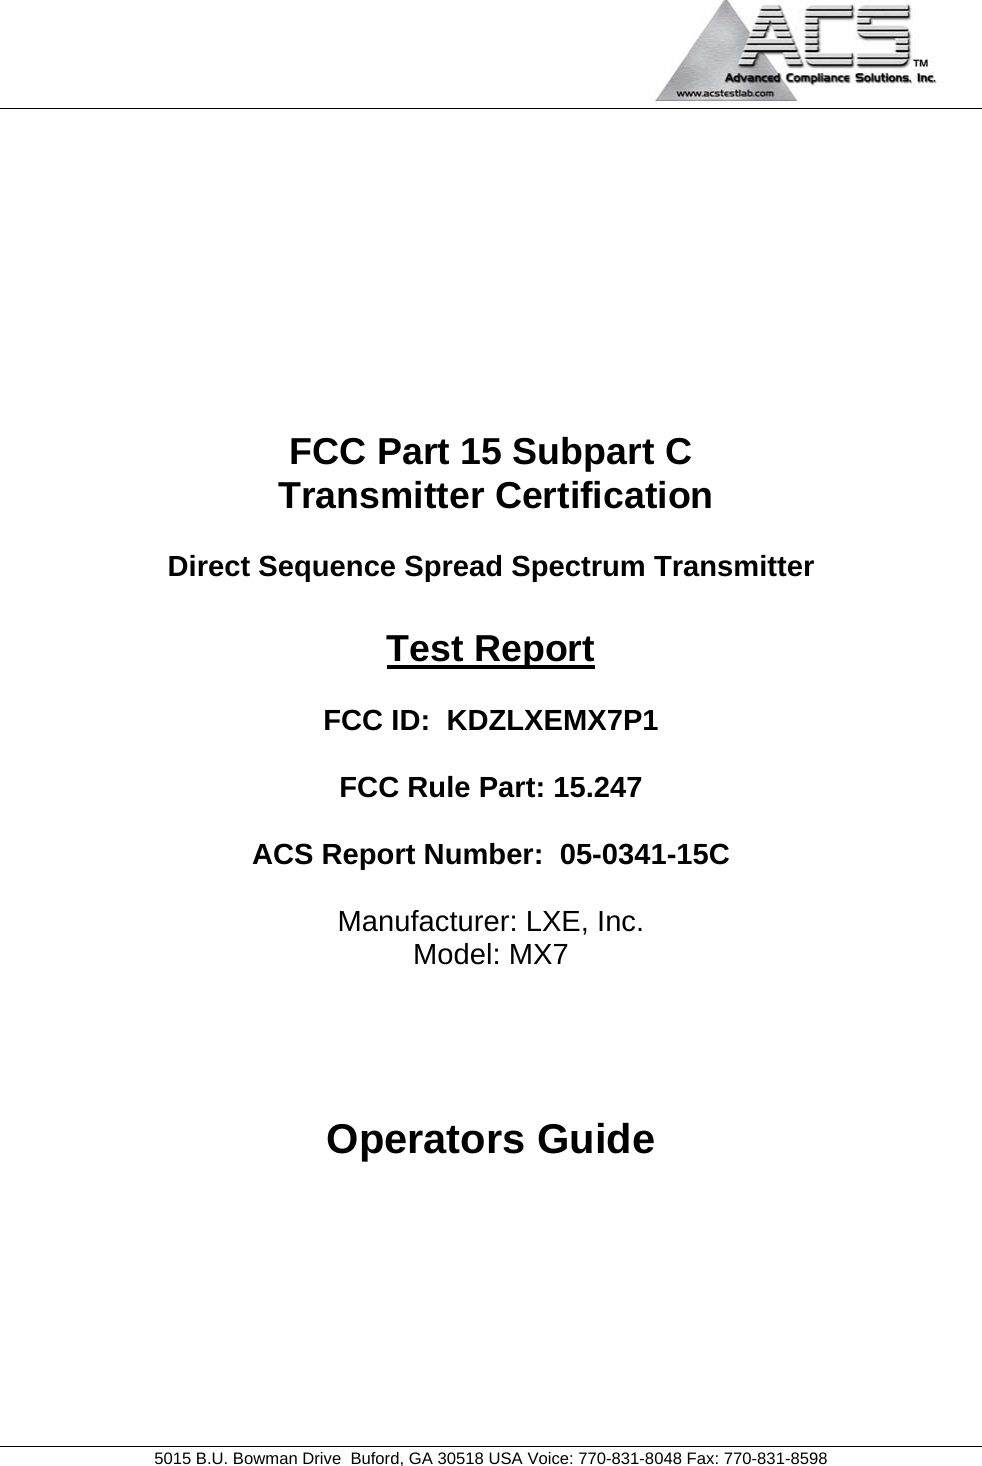                                             5015 B.U. Bowman Drive  Buford, GA 30518 USA Voice: 770-831-8048 Fax: 770-831-8598    FCC Part 15 Subpart C  Transmitter Certification  Direct Sequence Spread Spectrum Transmitter  Test Report  FCC ID:  KDZLXEMX7P1  FCC Rule Part: 15.247  ACS Report Number:  05-0341-15C   Manufacturer: LXE, Inc. Model: MX7    Operators Guide 